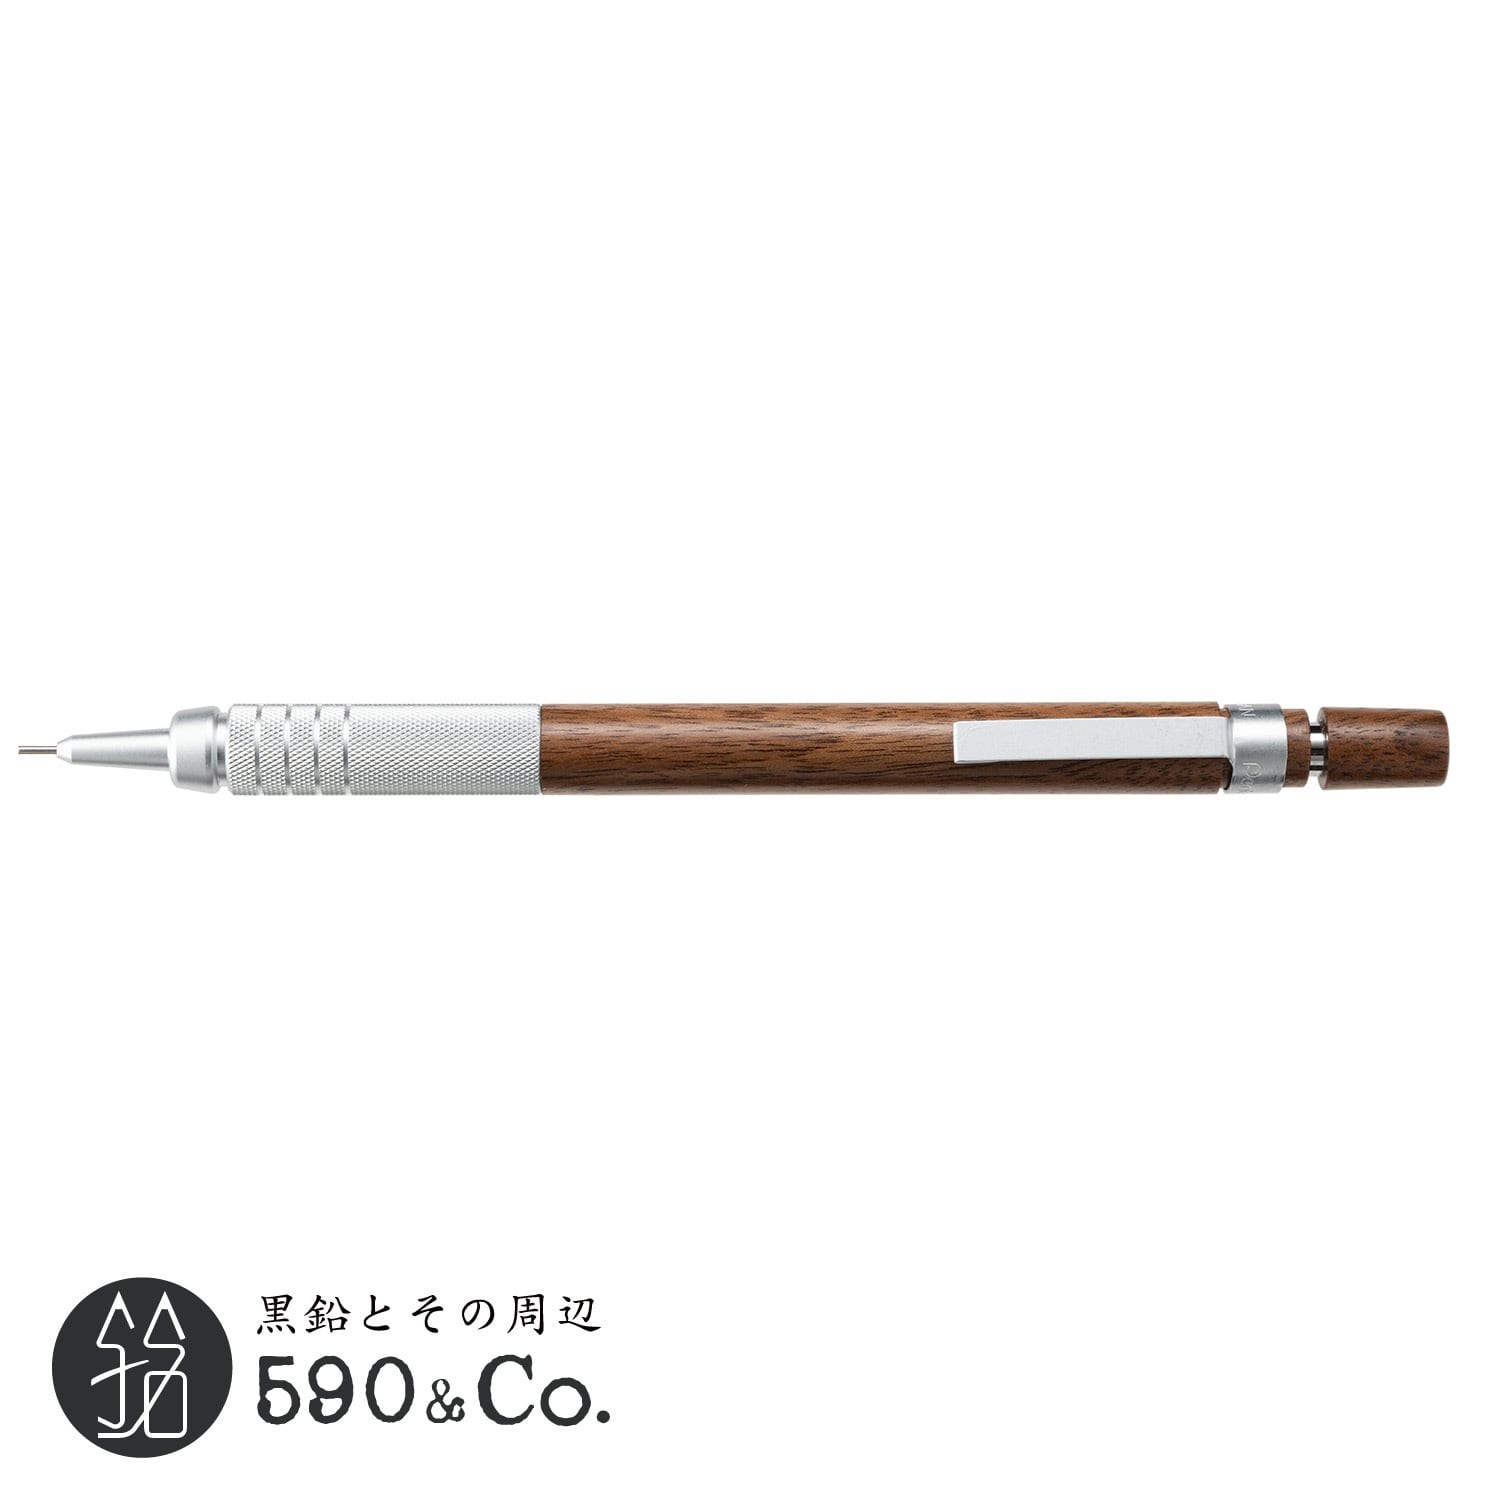 ALINA penmaker】Hotaru 木軸グラフギア (ウォールナット) | 590&Co.